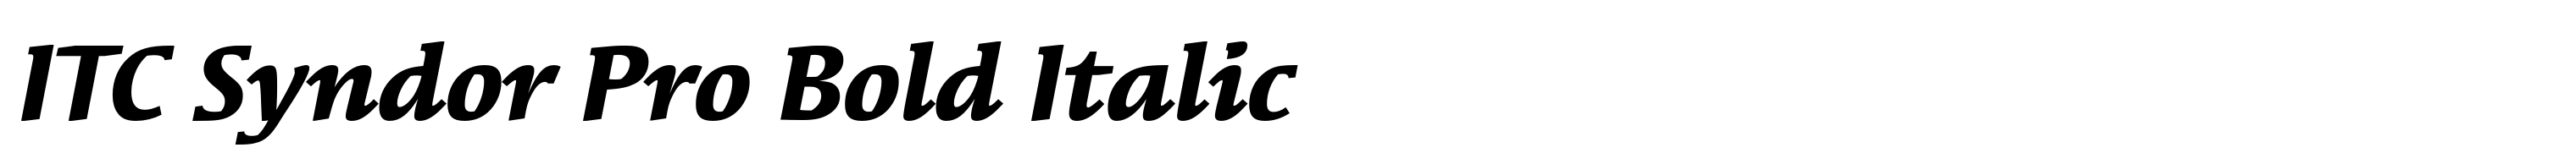 ITC Syndor Pro Bold Italic